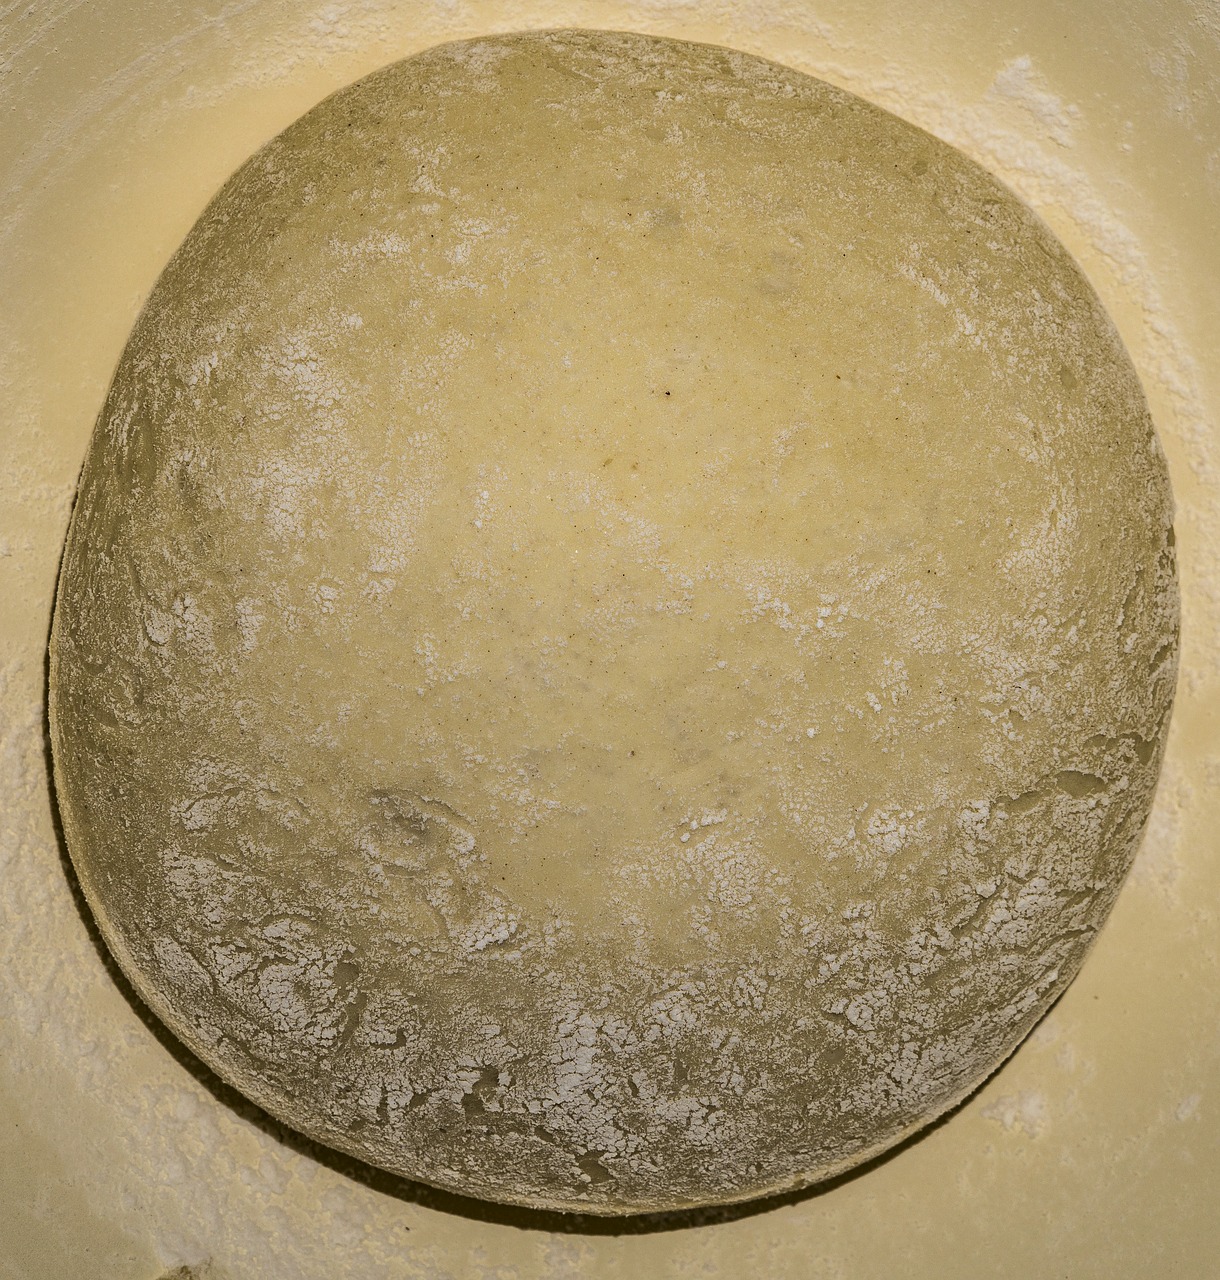 dough yeast pizza dough free photo